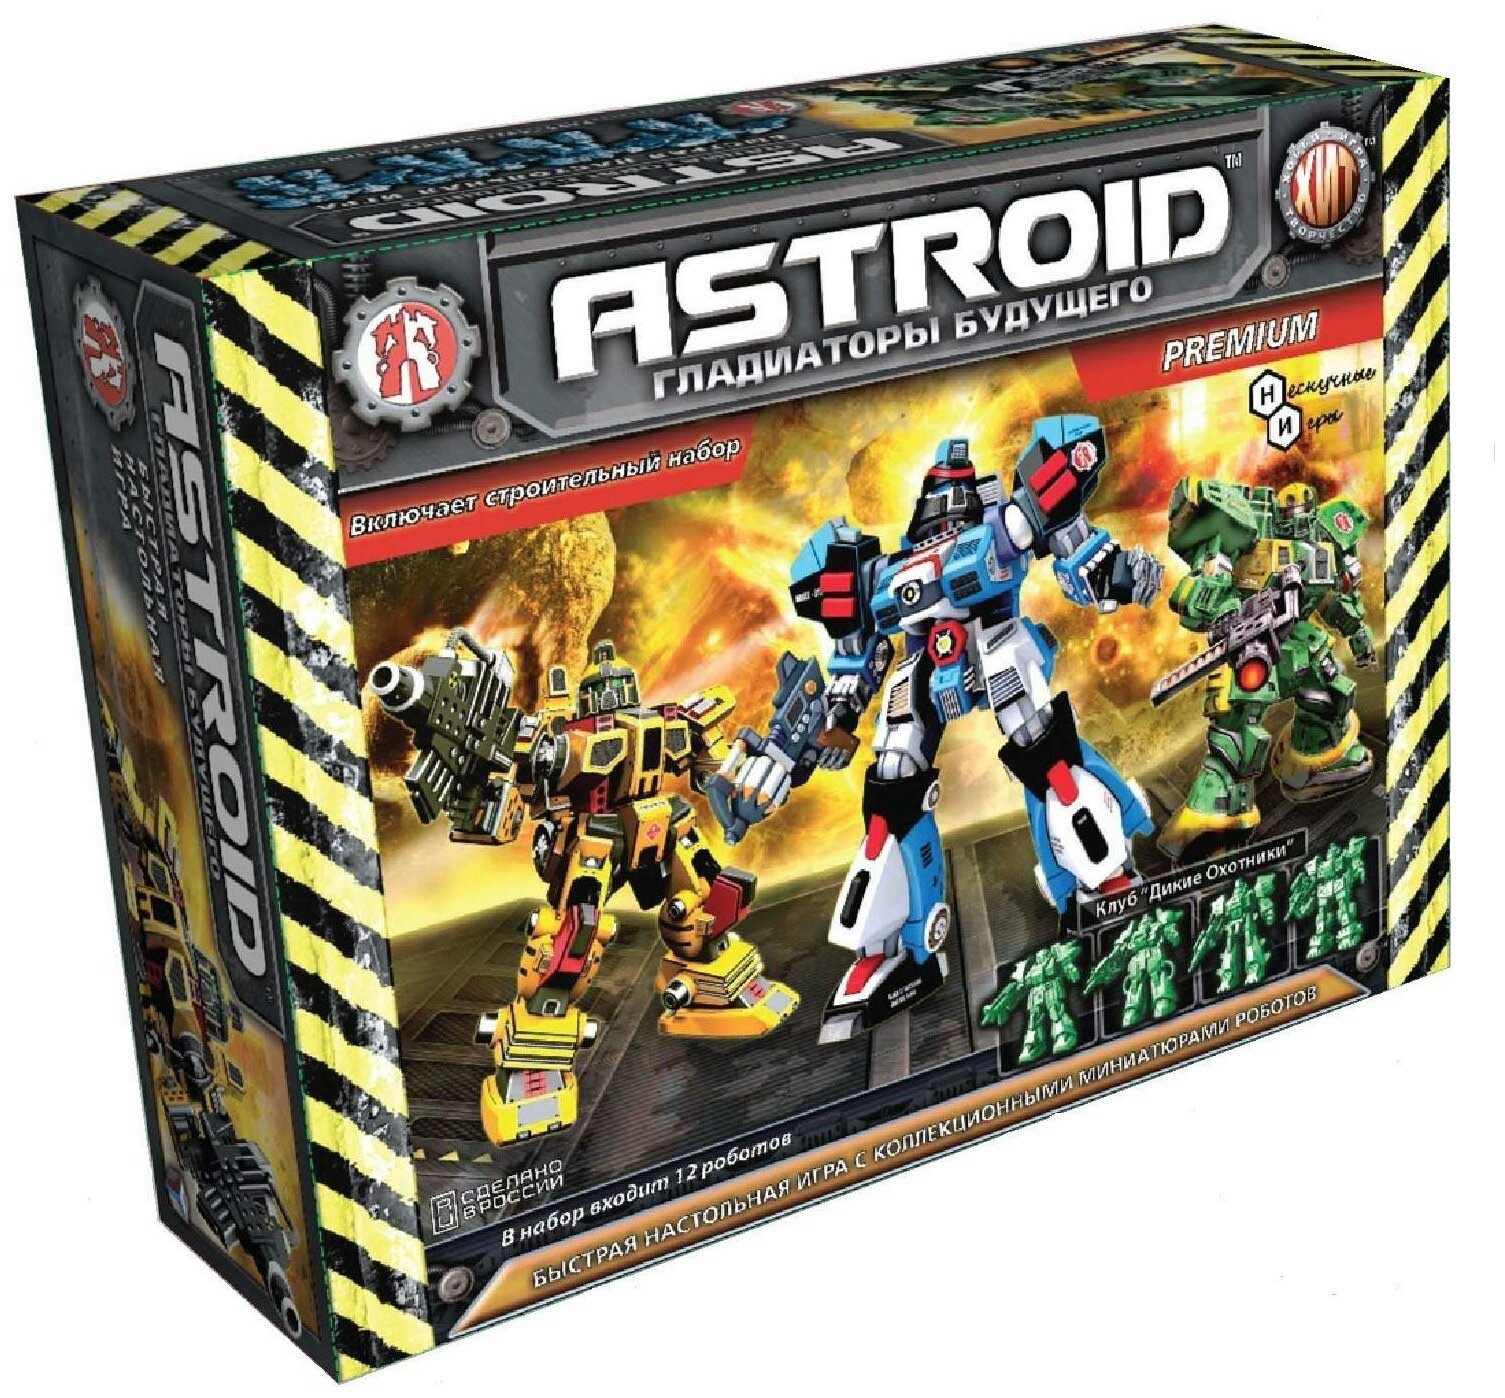 Игровой набор Технолог ASTROID. Premium арт.00359